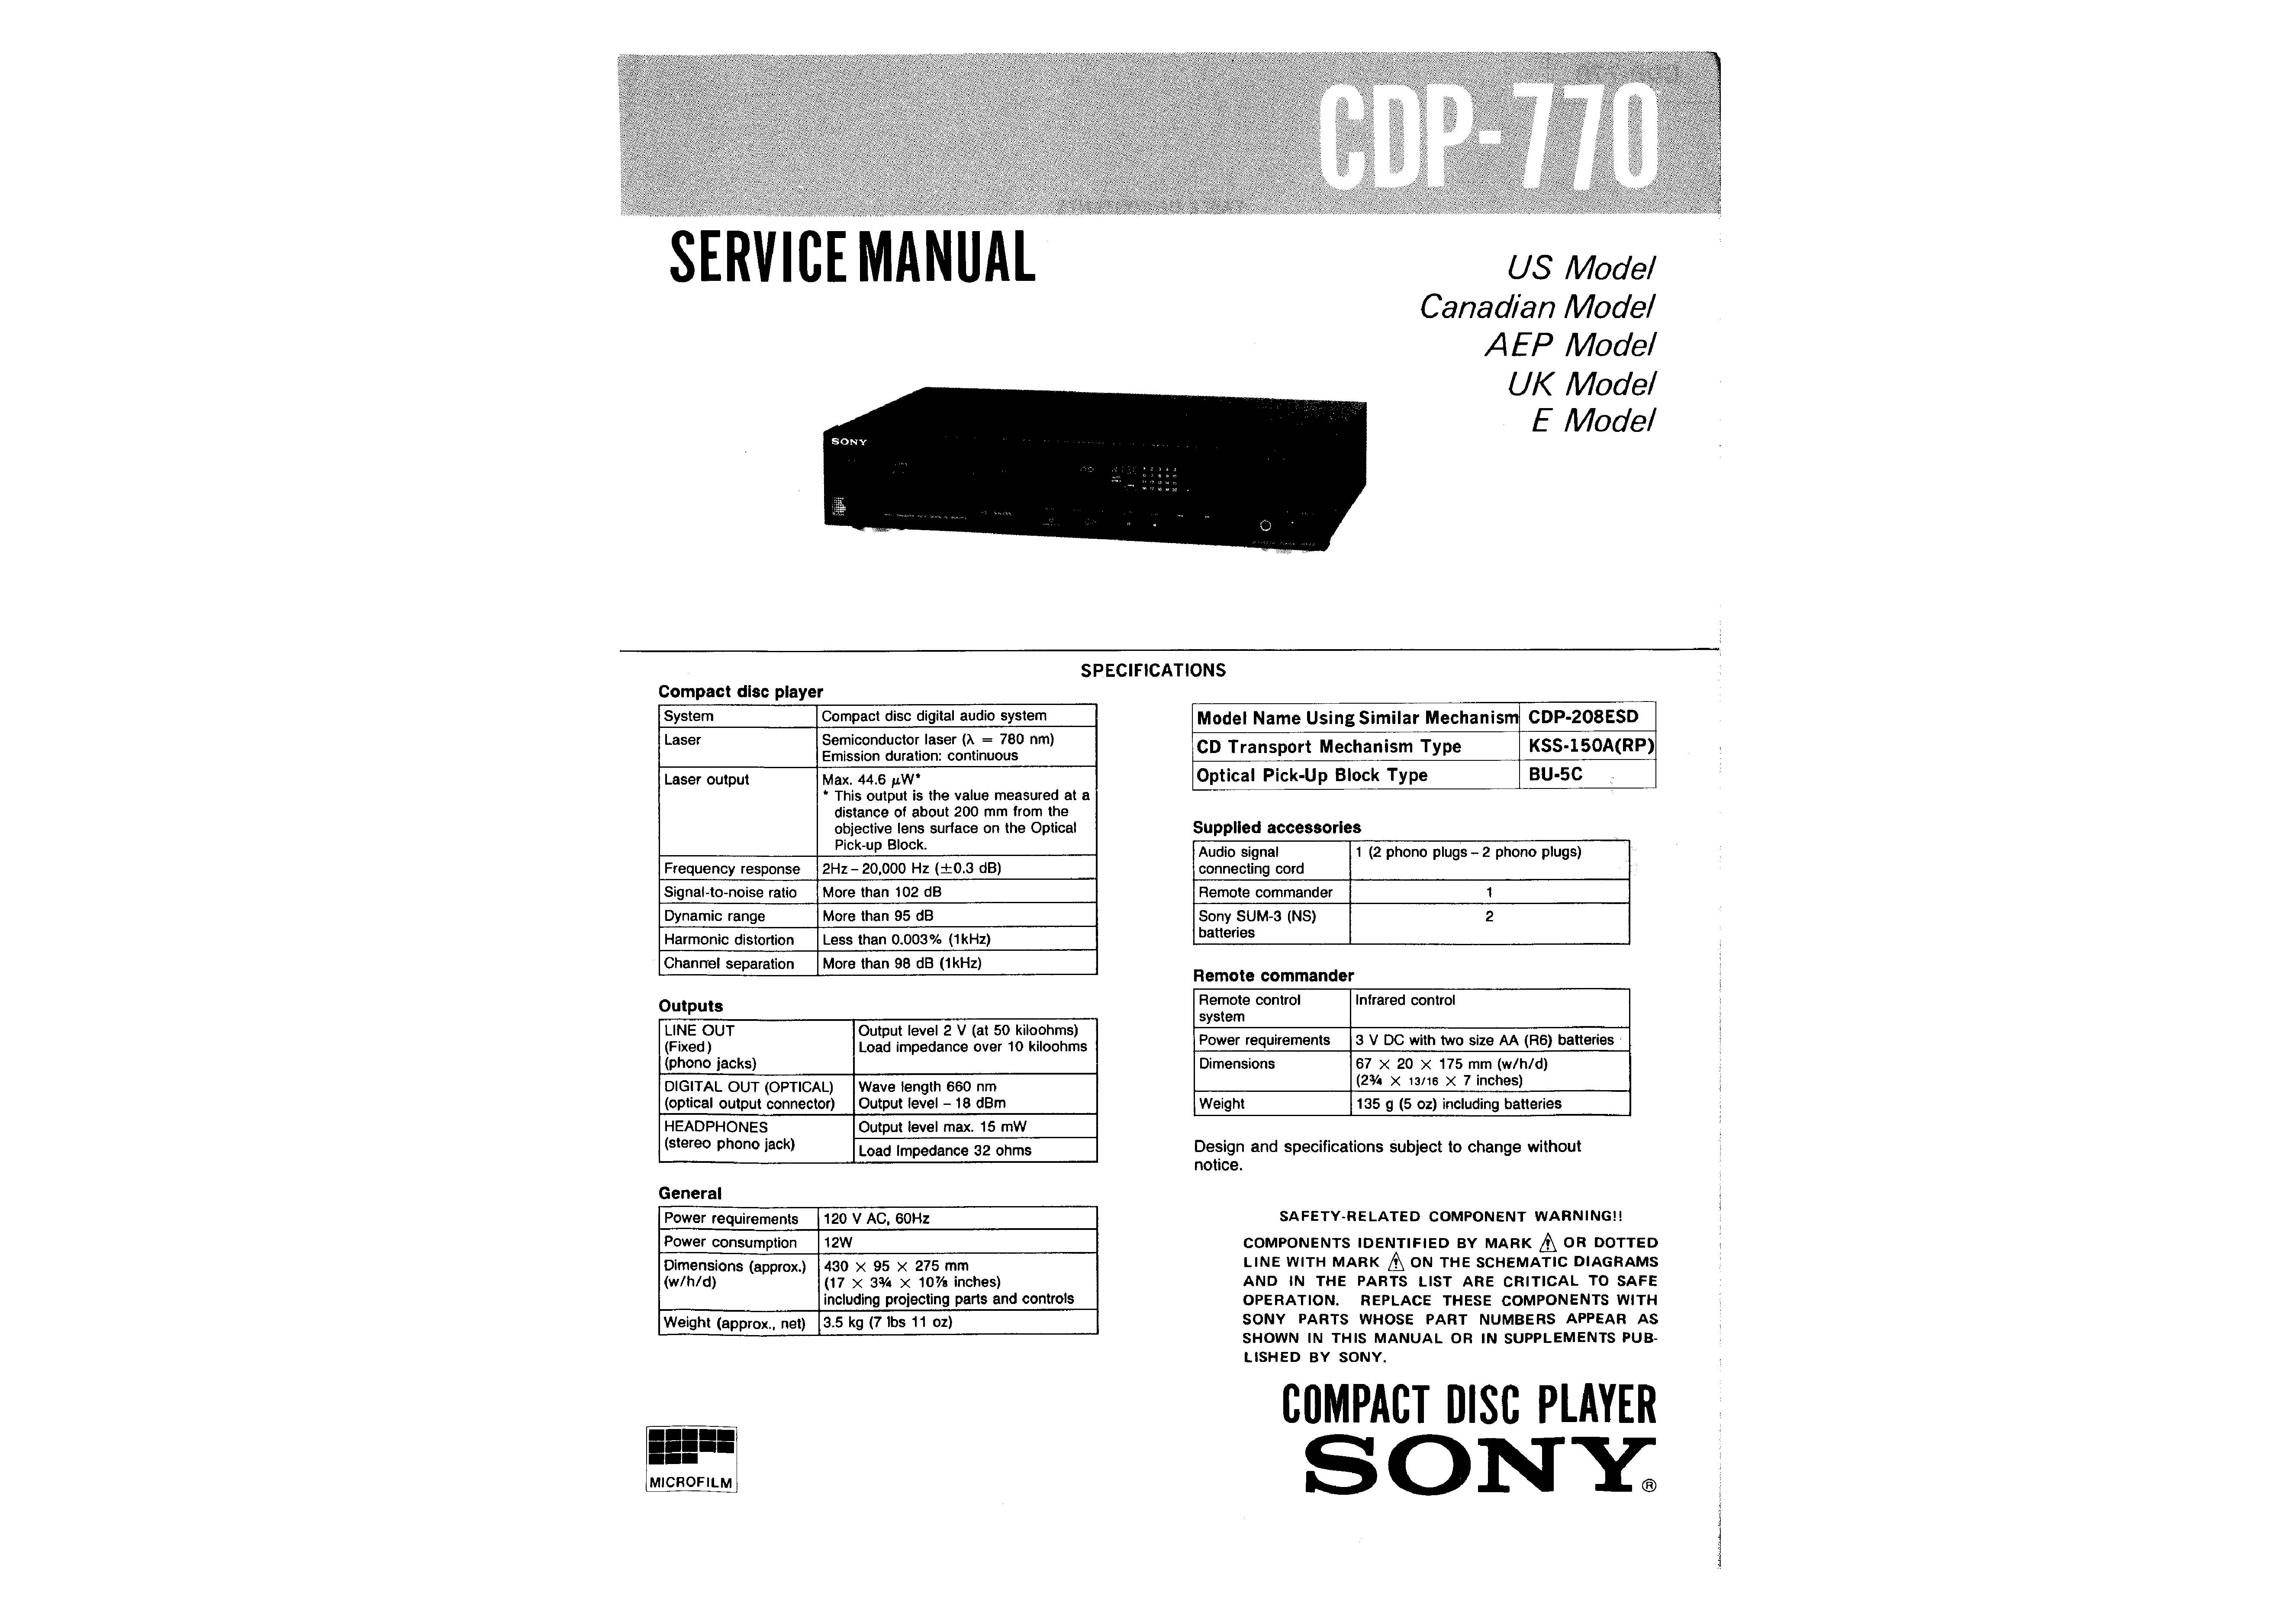 Sony CDP-770